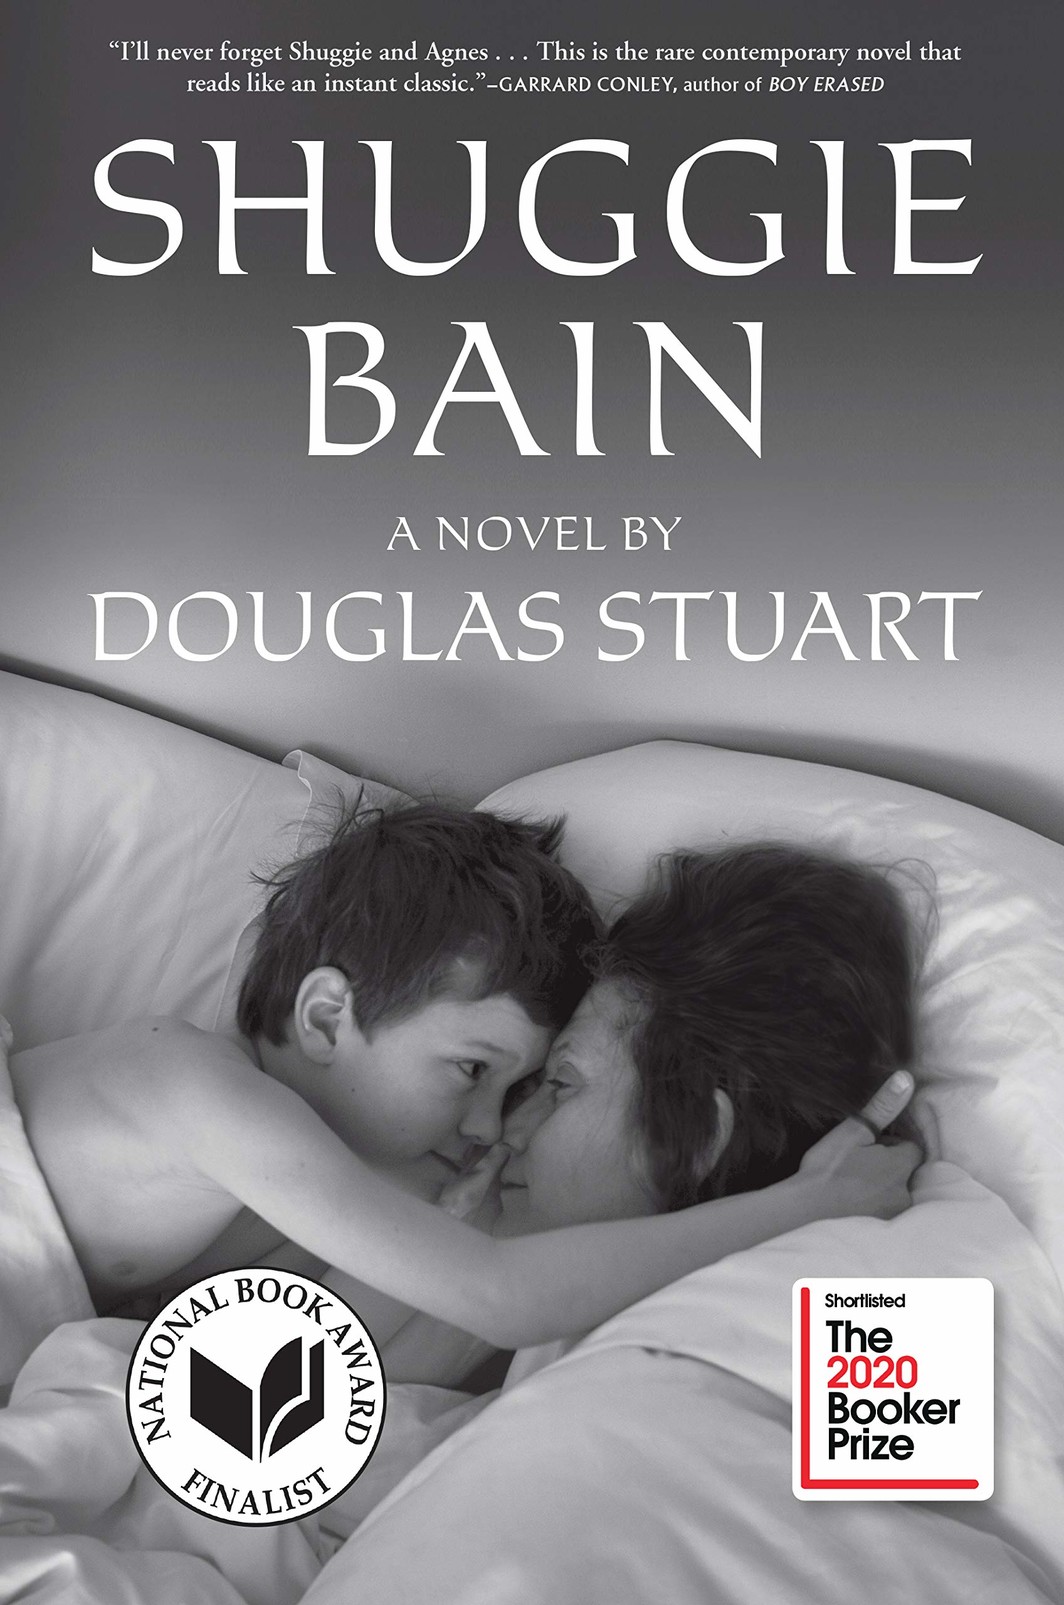 The cover of Shuggie Bain: A Novel